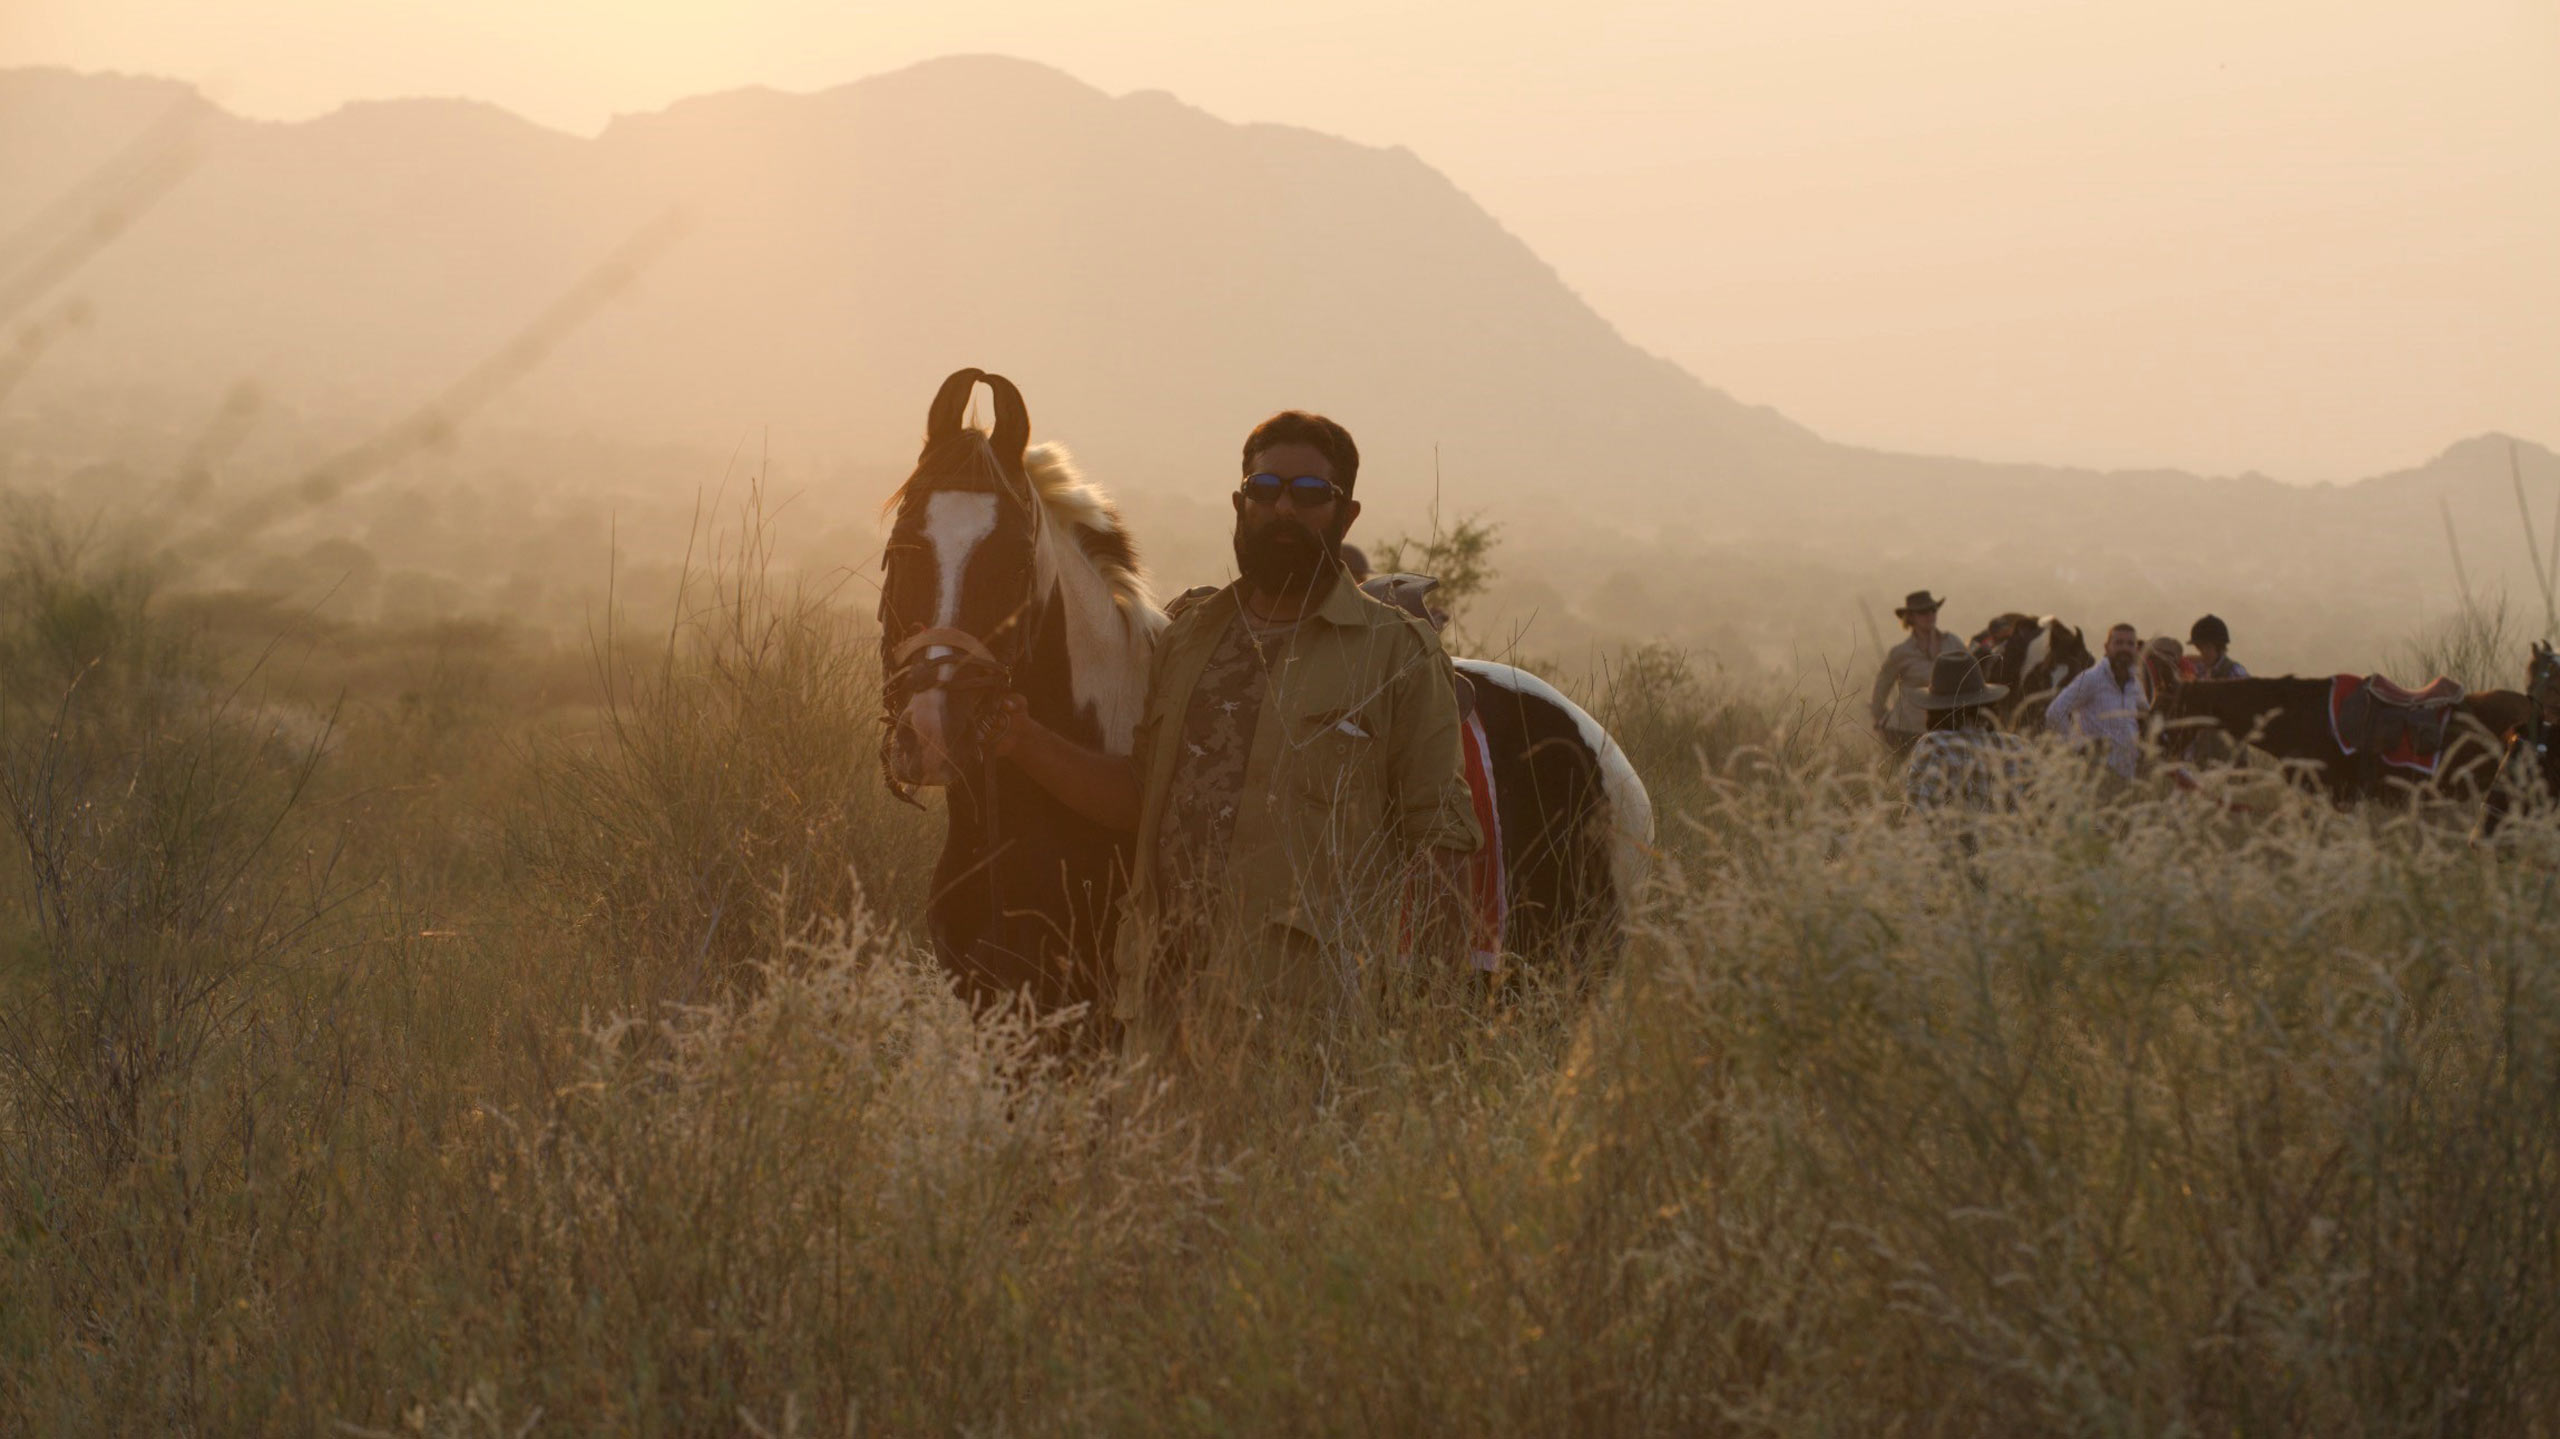 Riding safari in Rajasthan, India